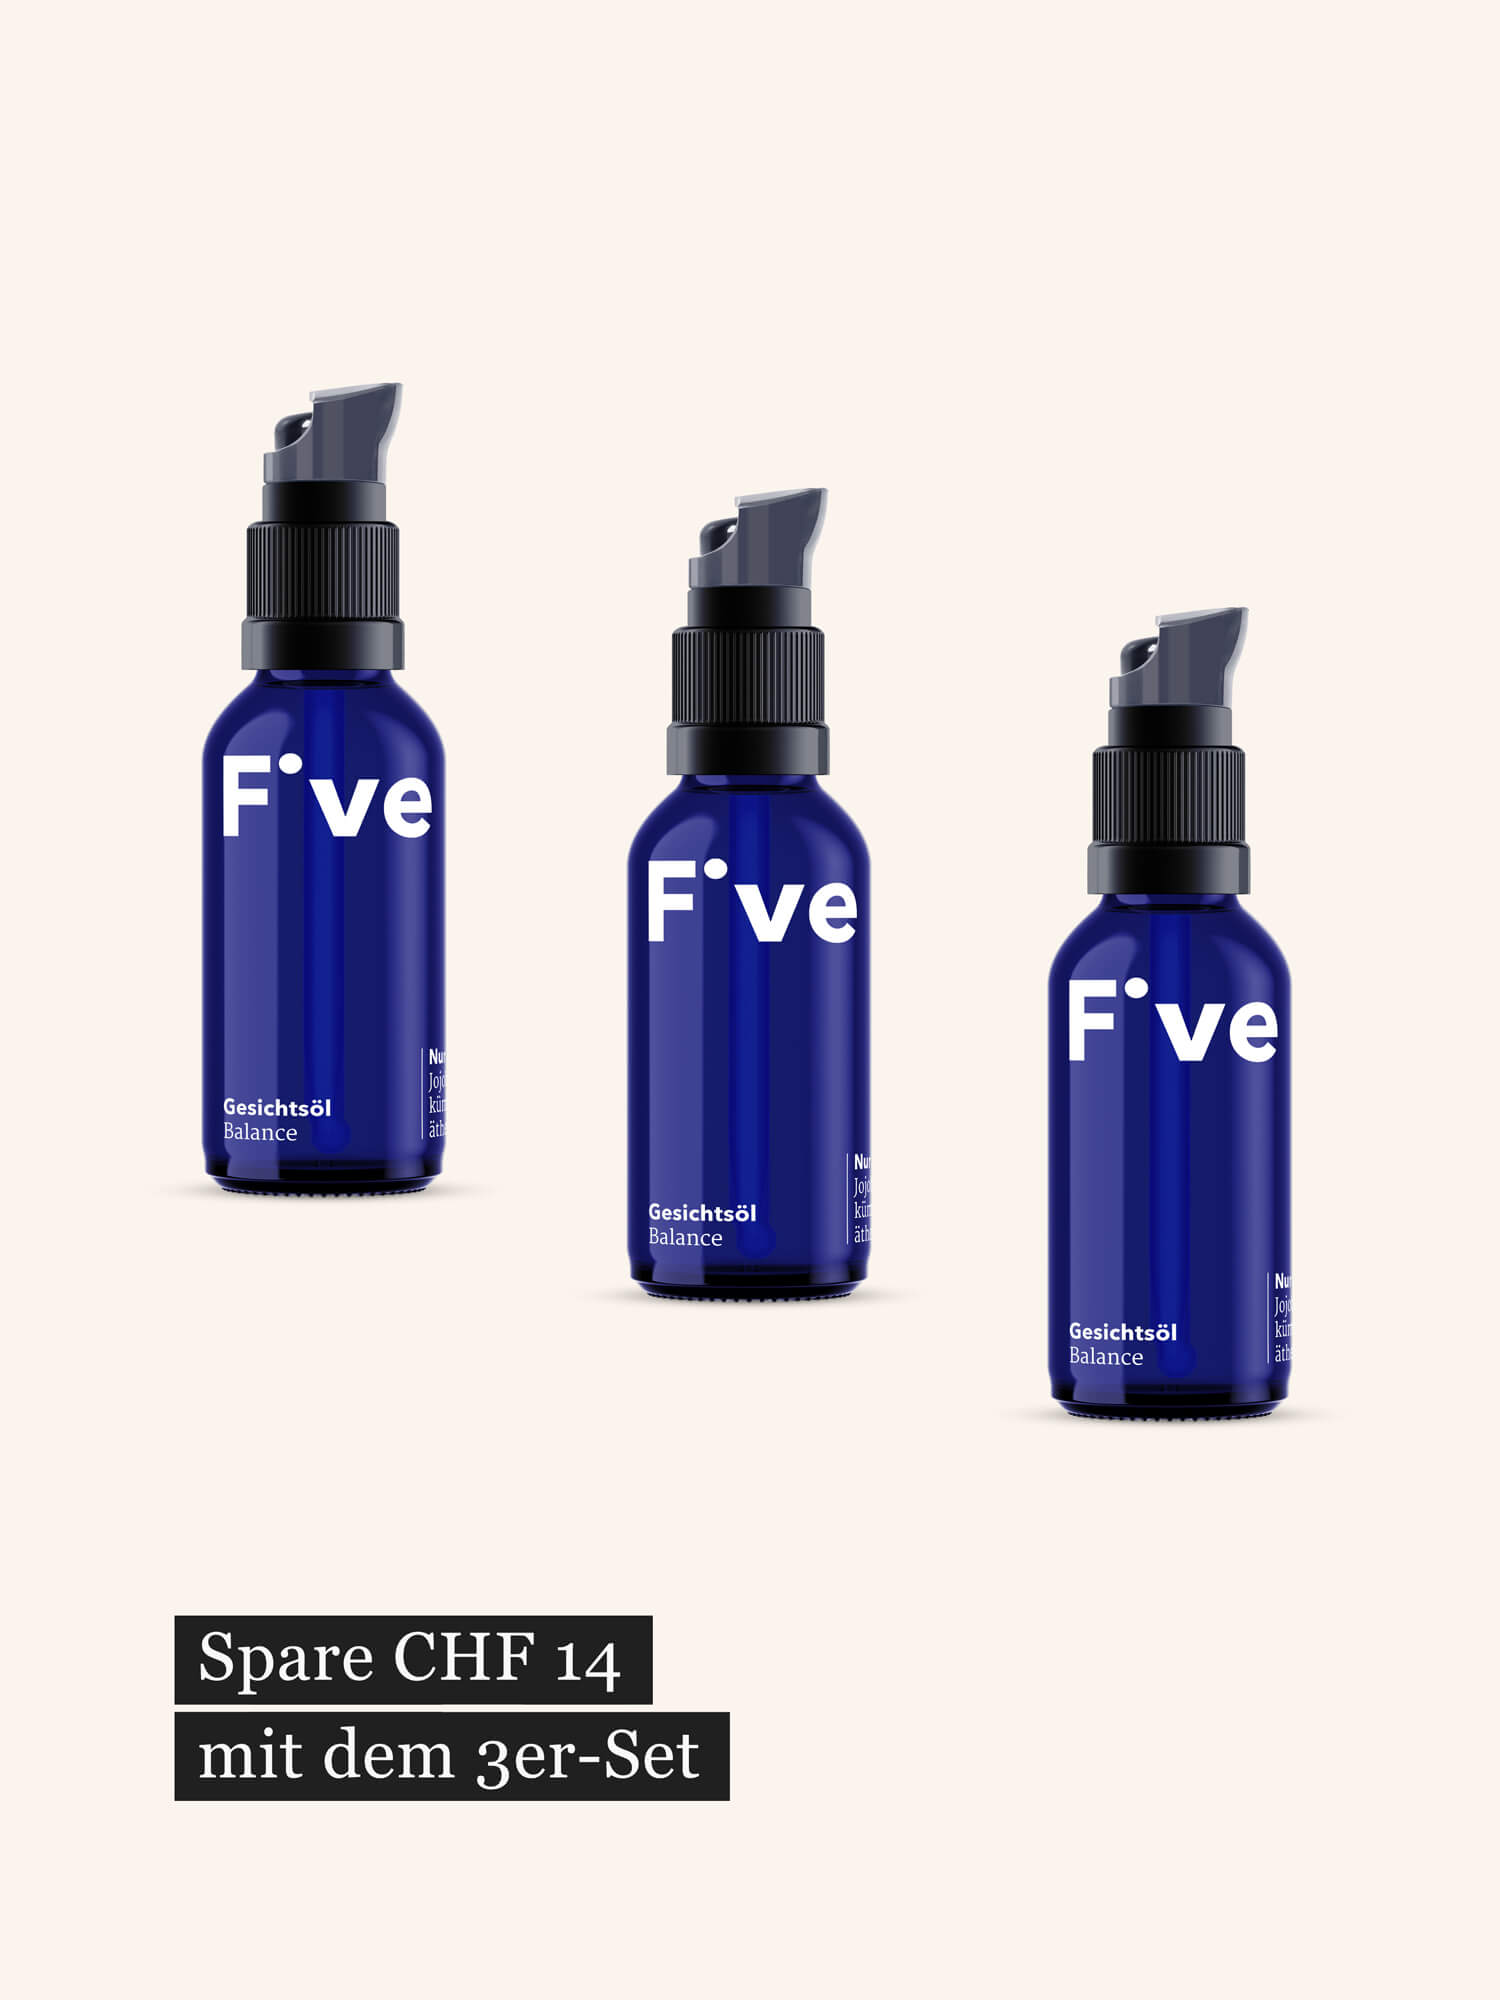 3 × FIVE Gesichtsöl Balance | Five Skincare